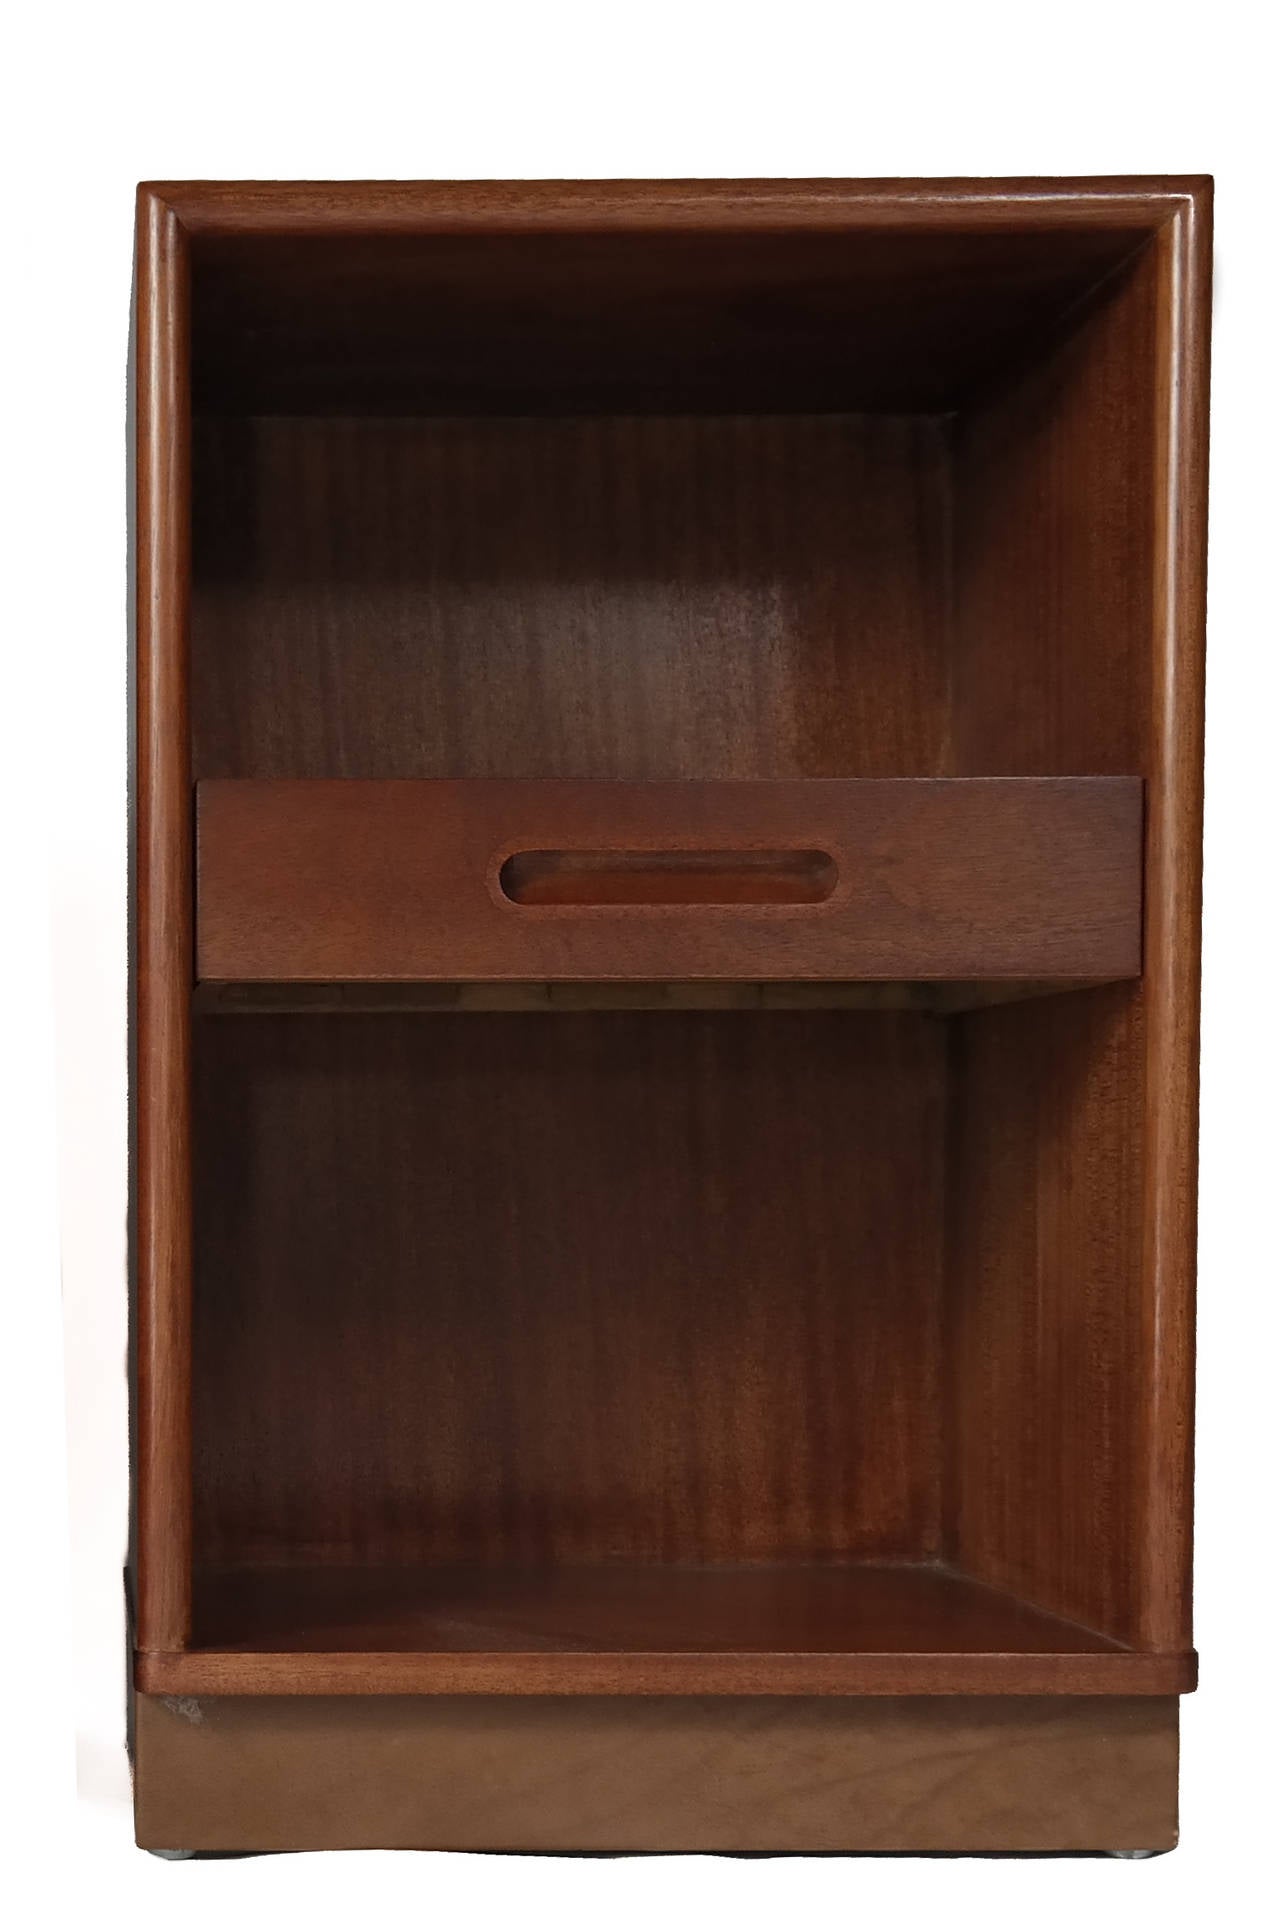 Mahogany Bedside Cabinets by Edward Wormley for Dunbar